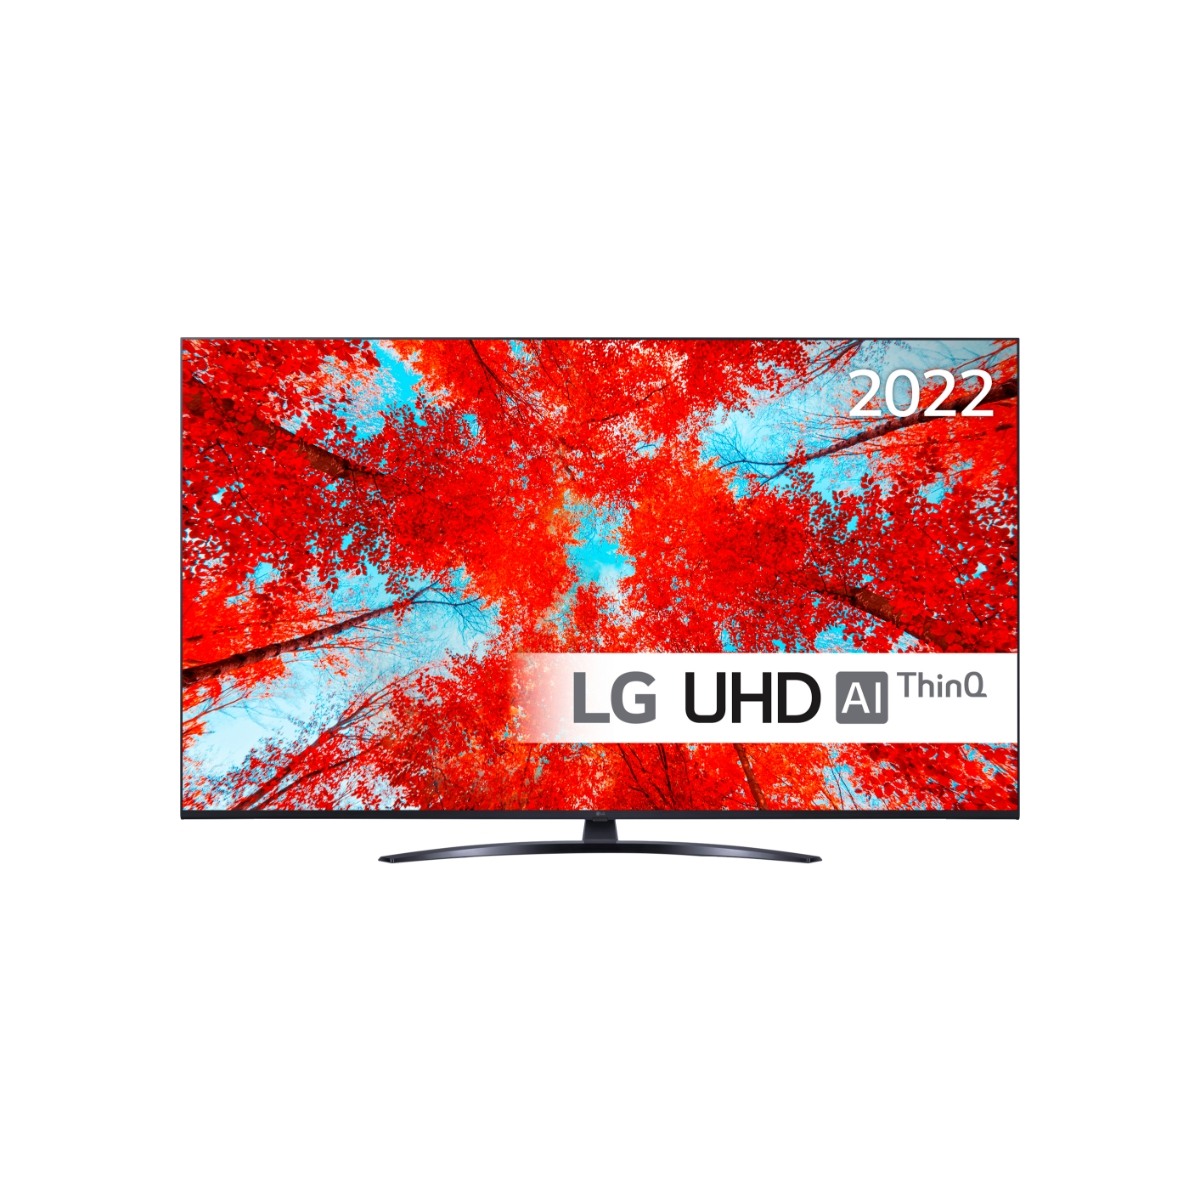 LG 4K UHD TV - Power.dk